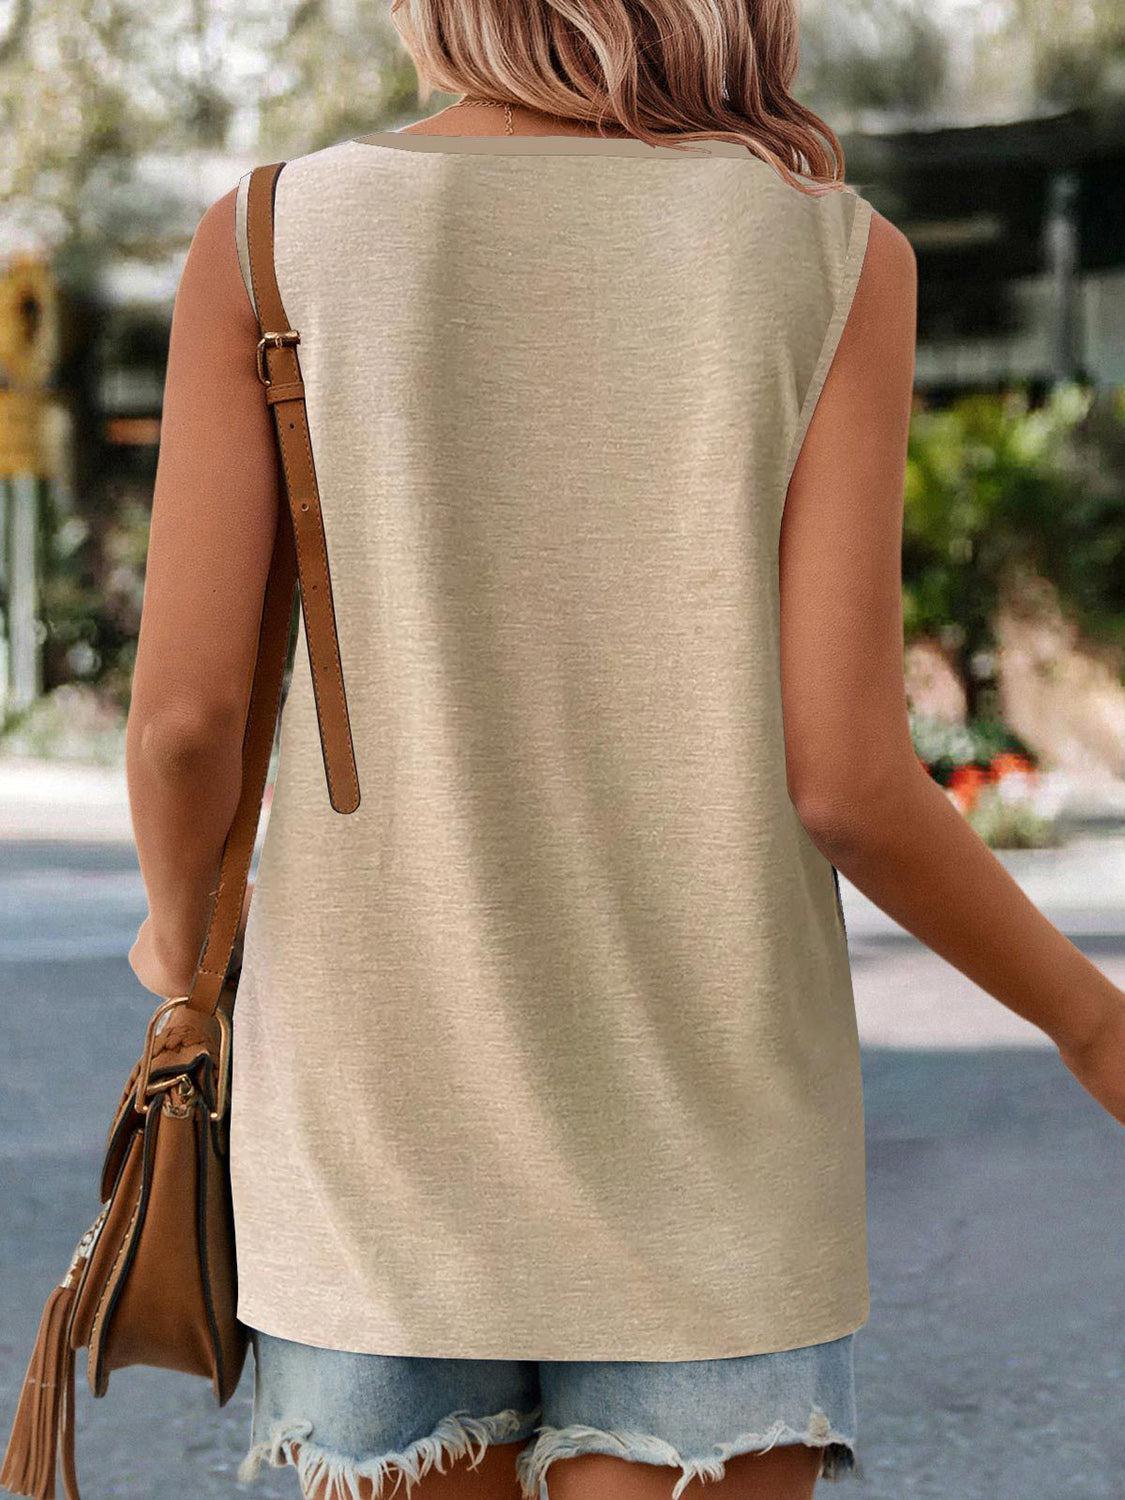 a woman walking down the street wearing a tan top